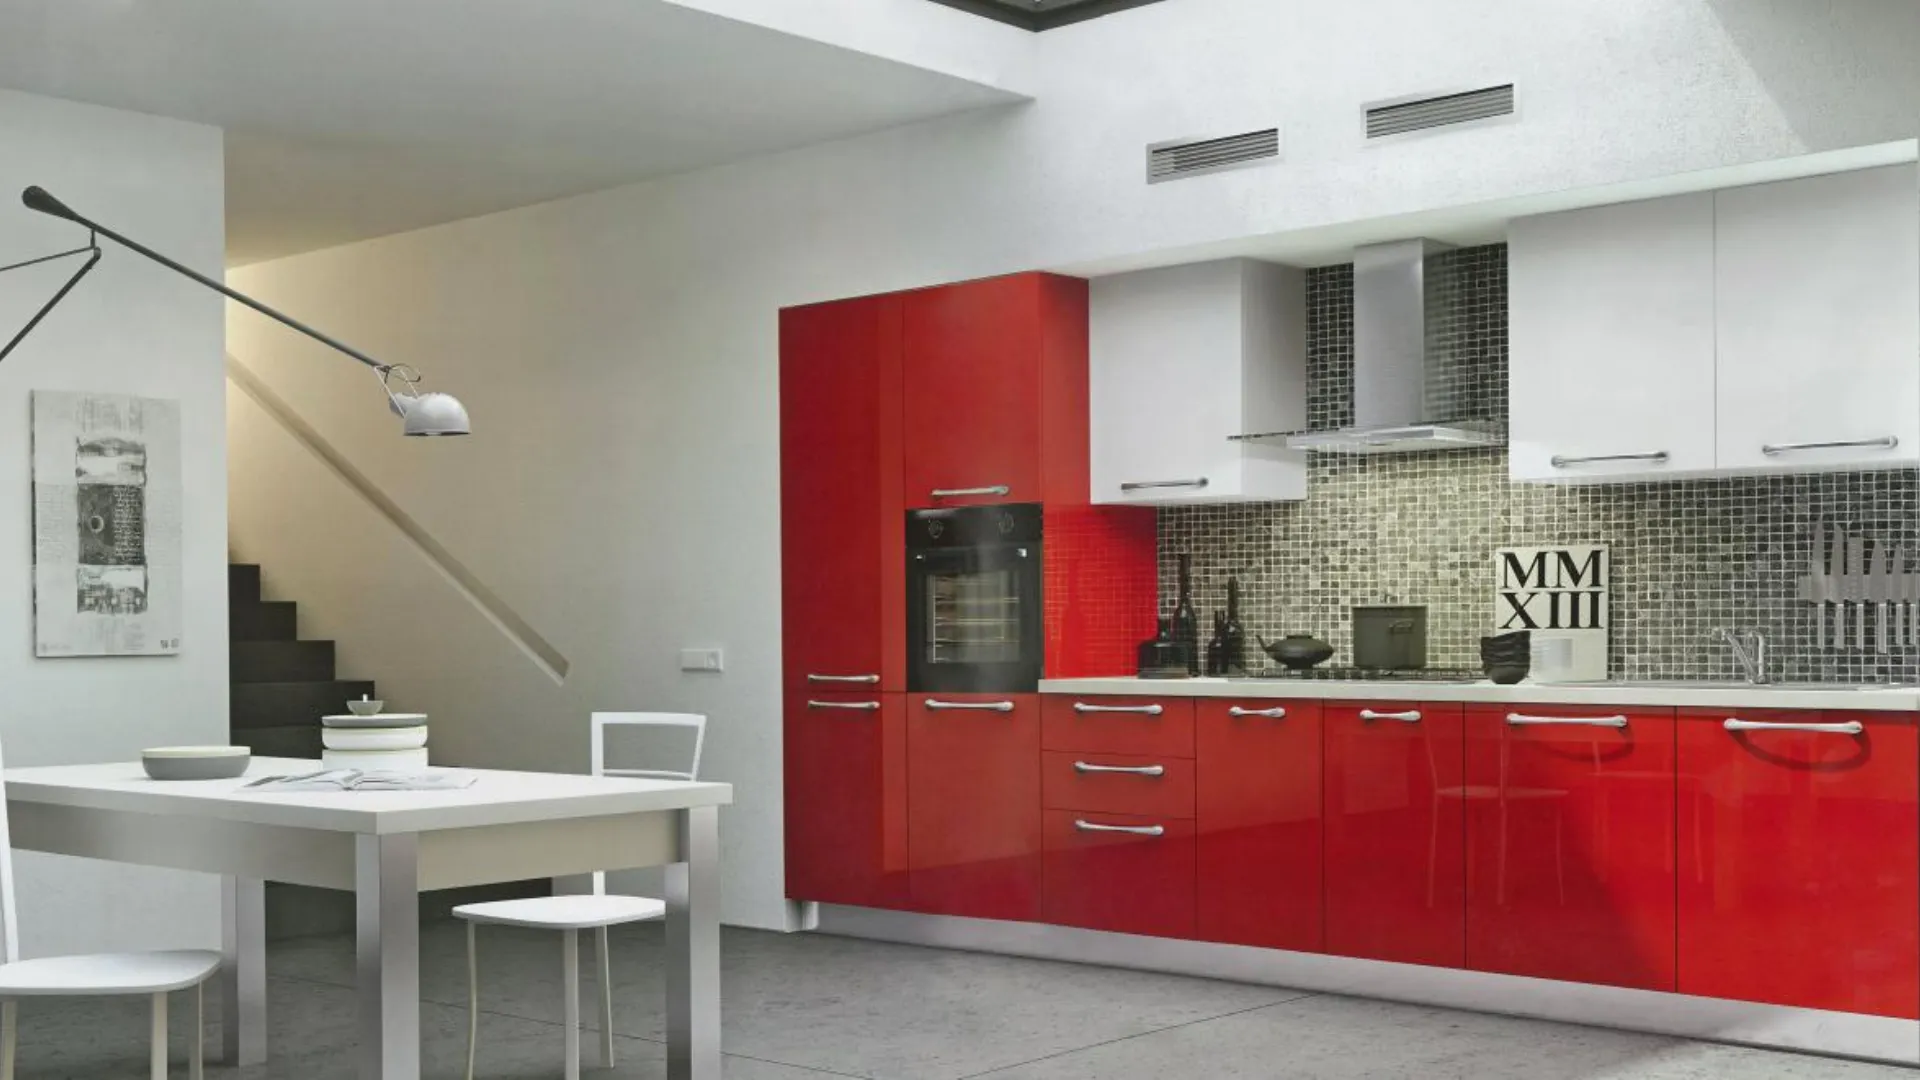 Modern kitchen with columns for modern built-in appliances